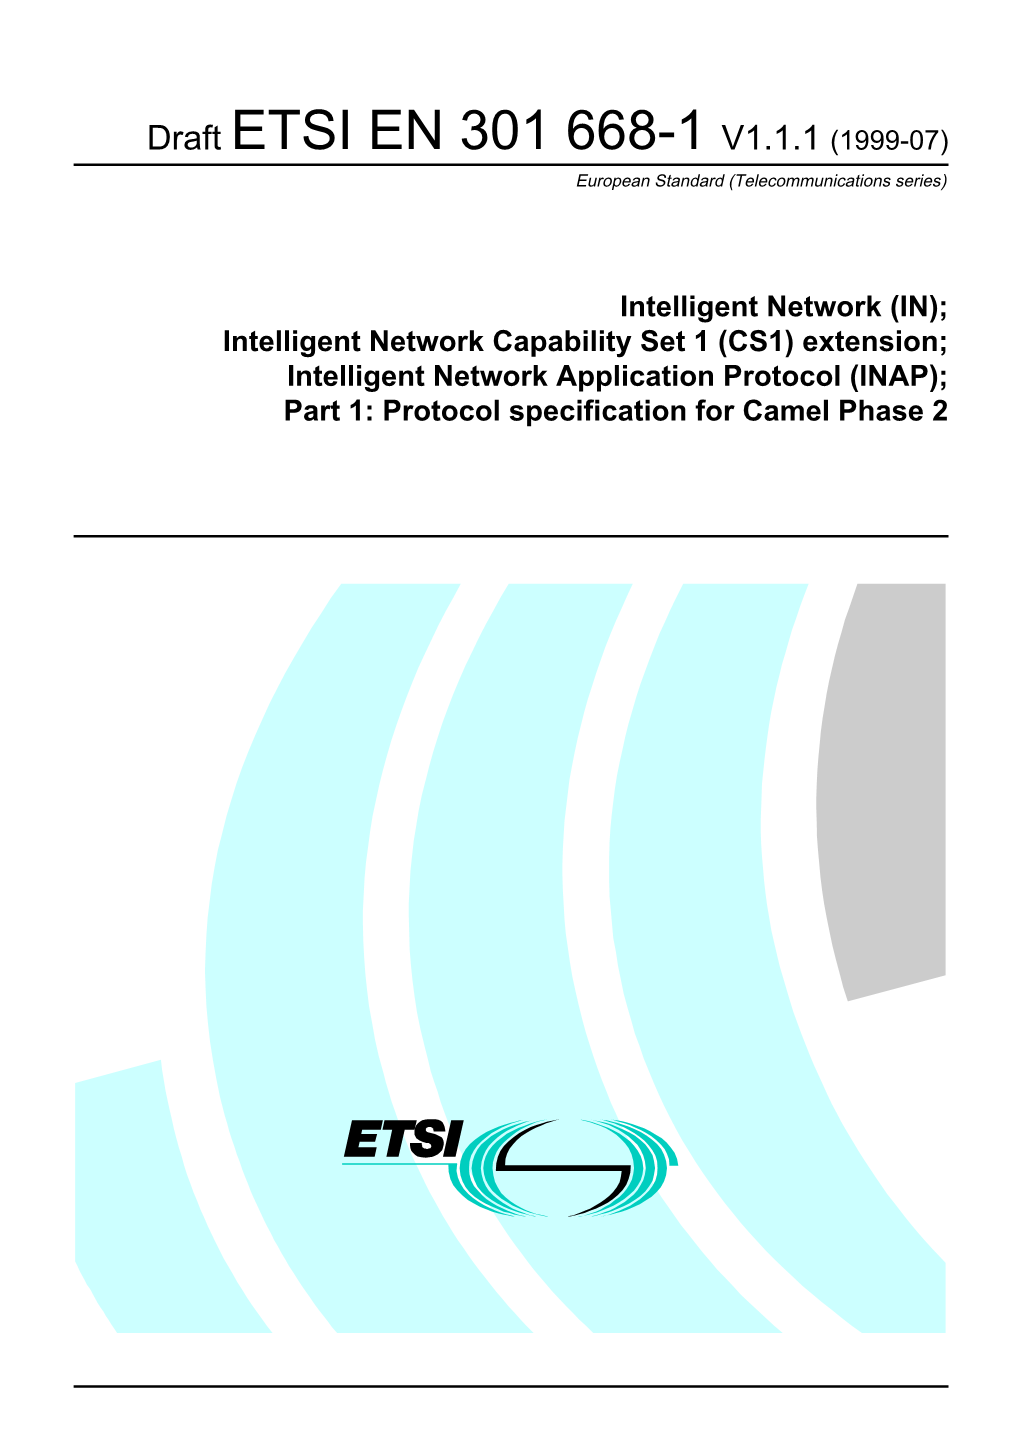 INAP); Part 1: Protocol Specification for Camel Phase 2 2 Draft ETSI EN 301 668-1 V1.1.1 (1999-07